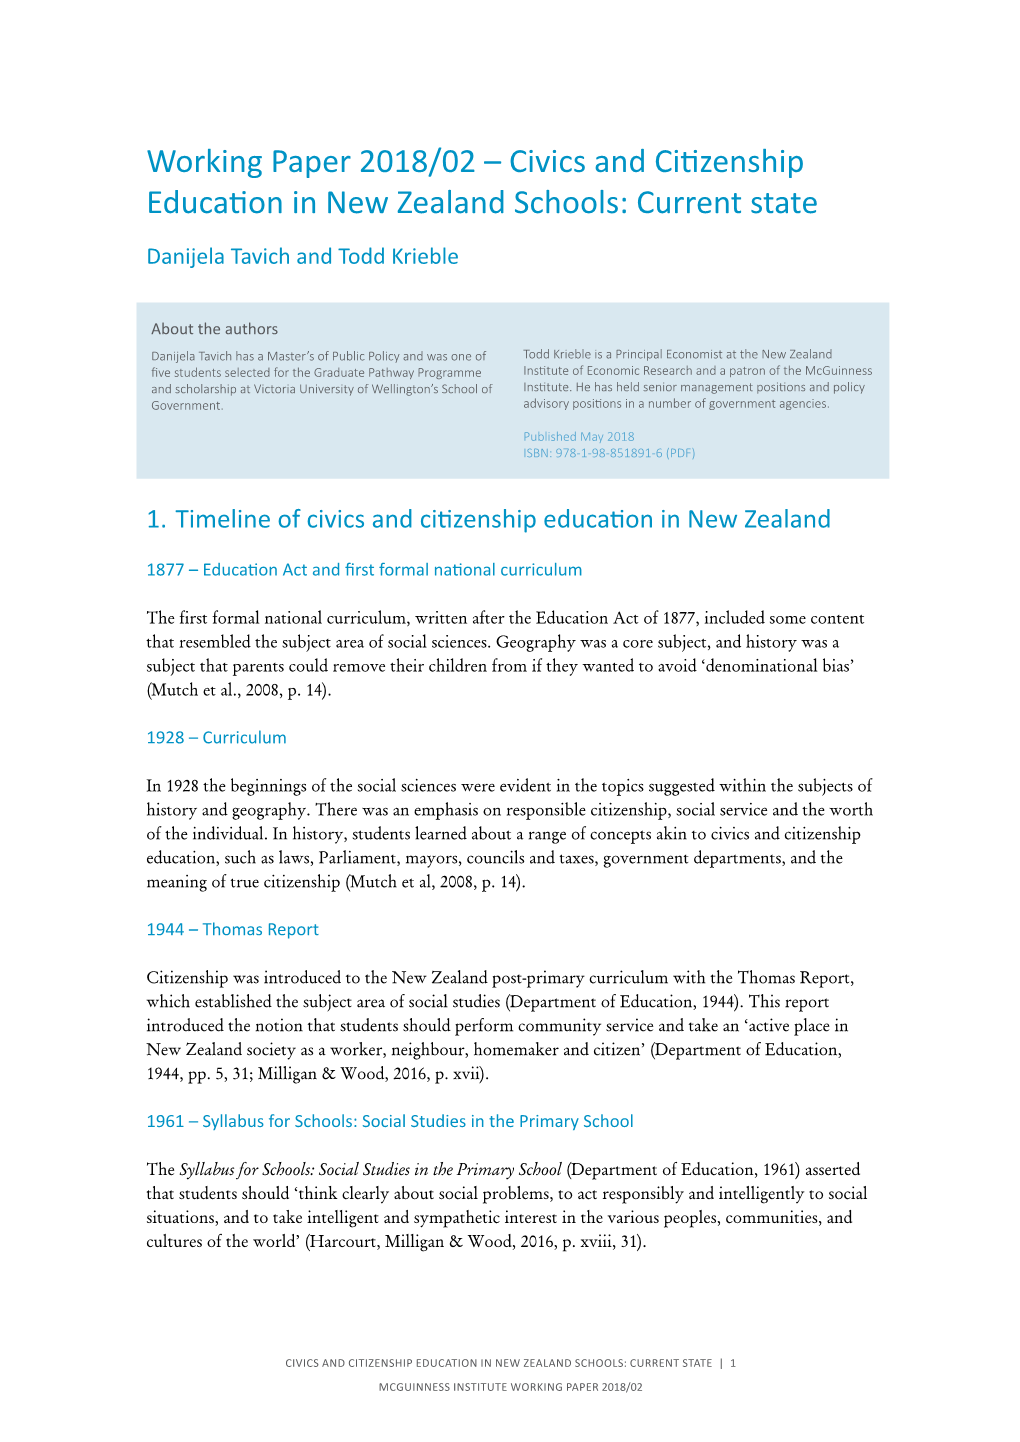 Civics and Citizenship Education in New Zealand Schools: Current State Danijela Tavich and Todd Krieble